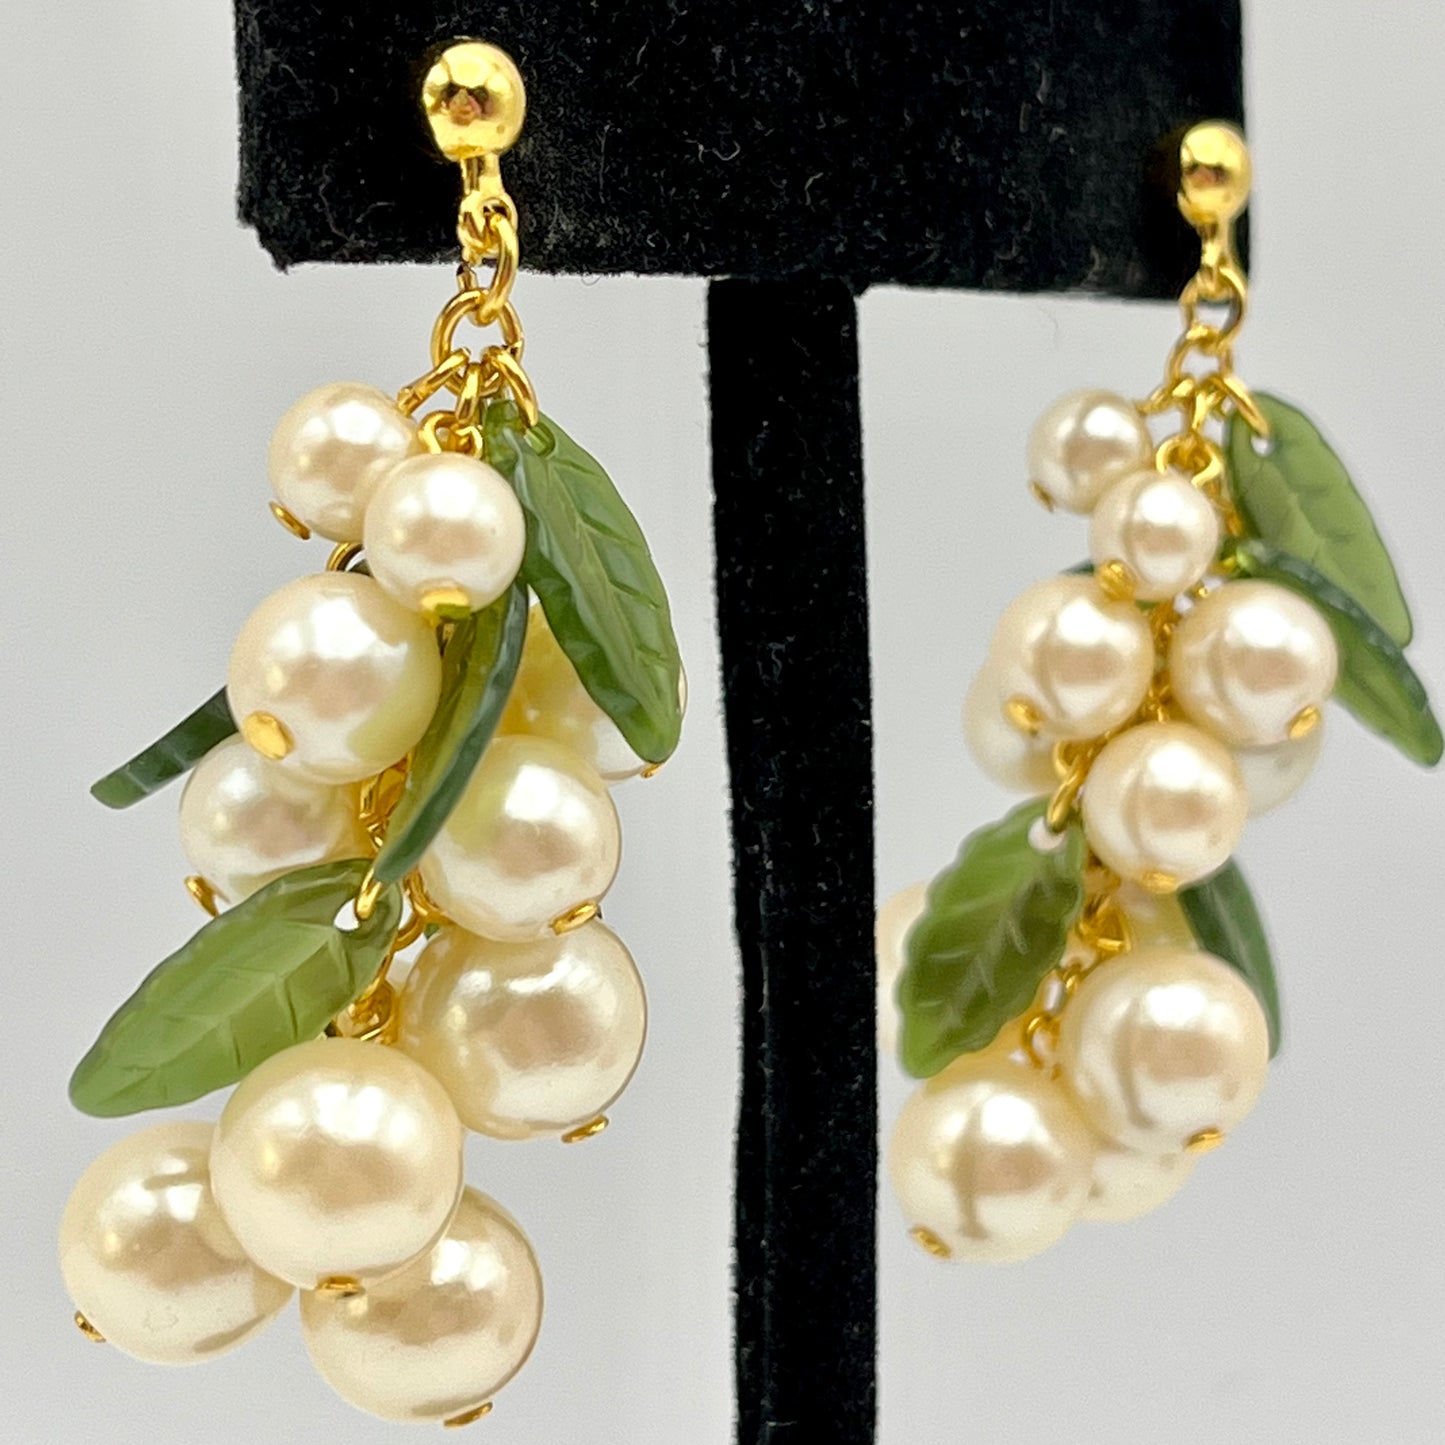 1992 Avon Pearlesque Dangle Earrings